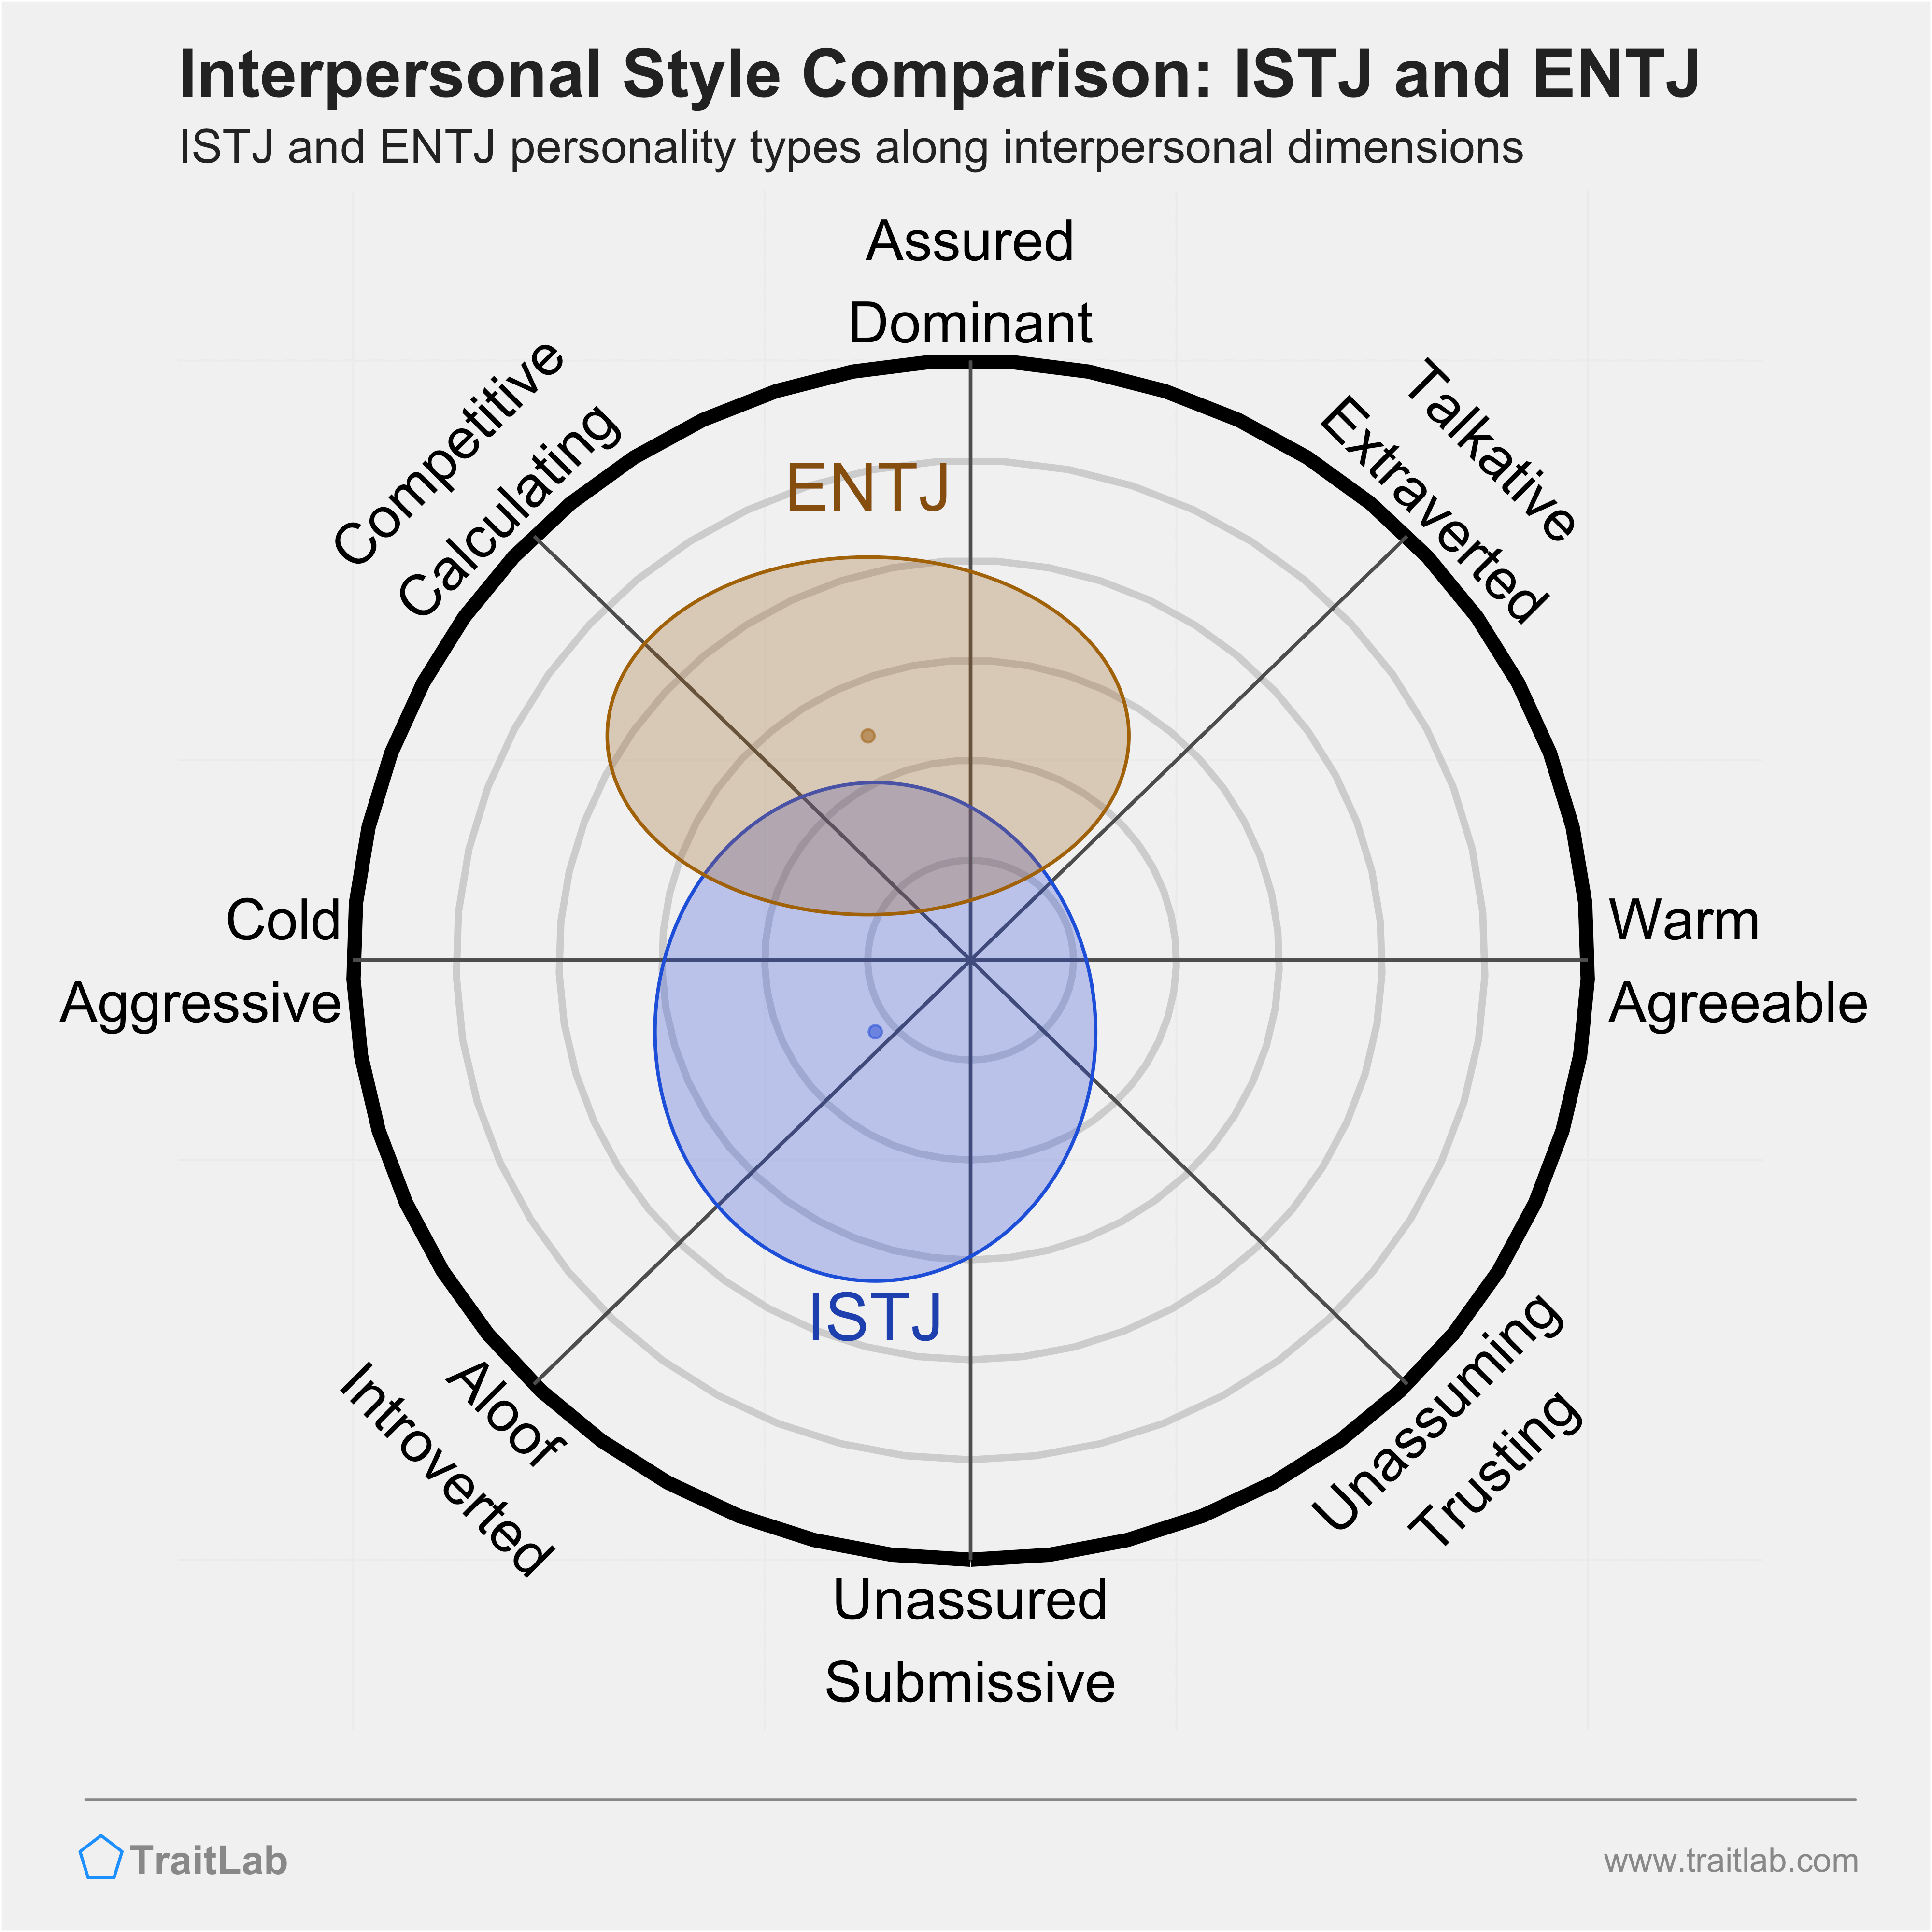 ISTJ and ENTJ comparison across interpersonal dimensions